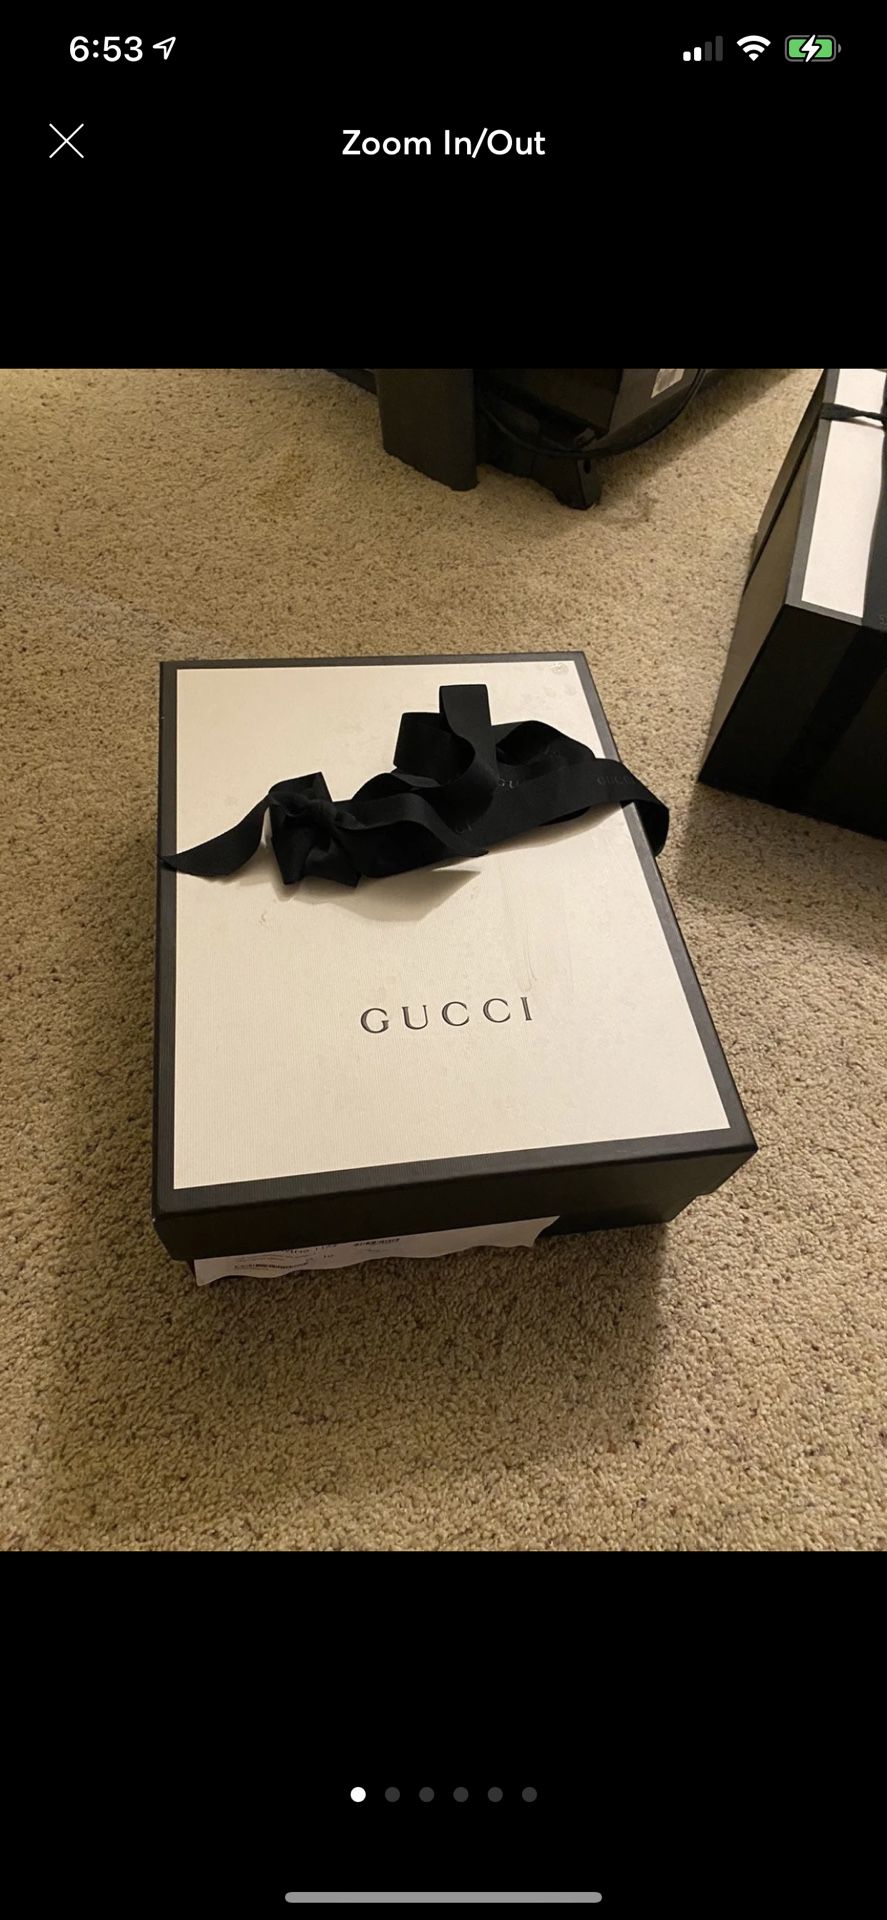 Gucci shoe box